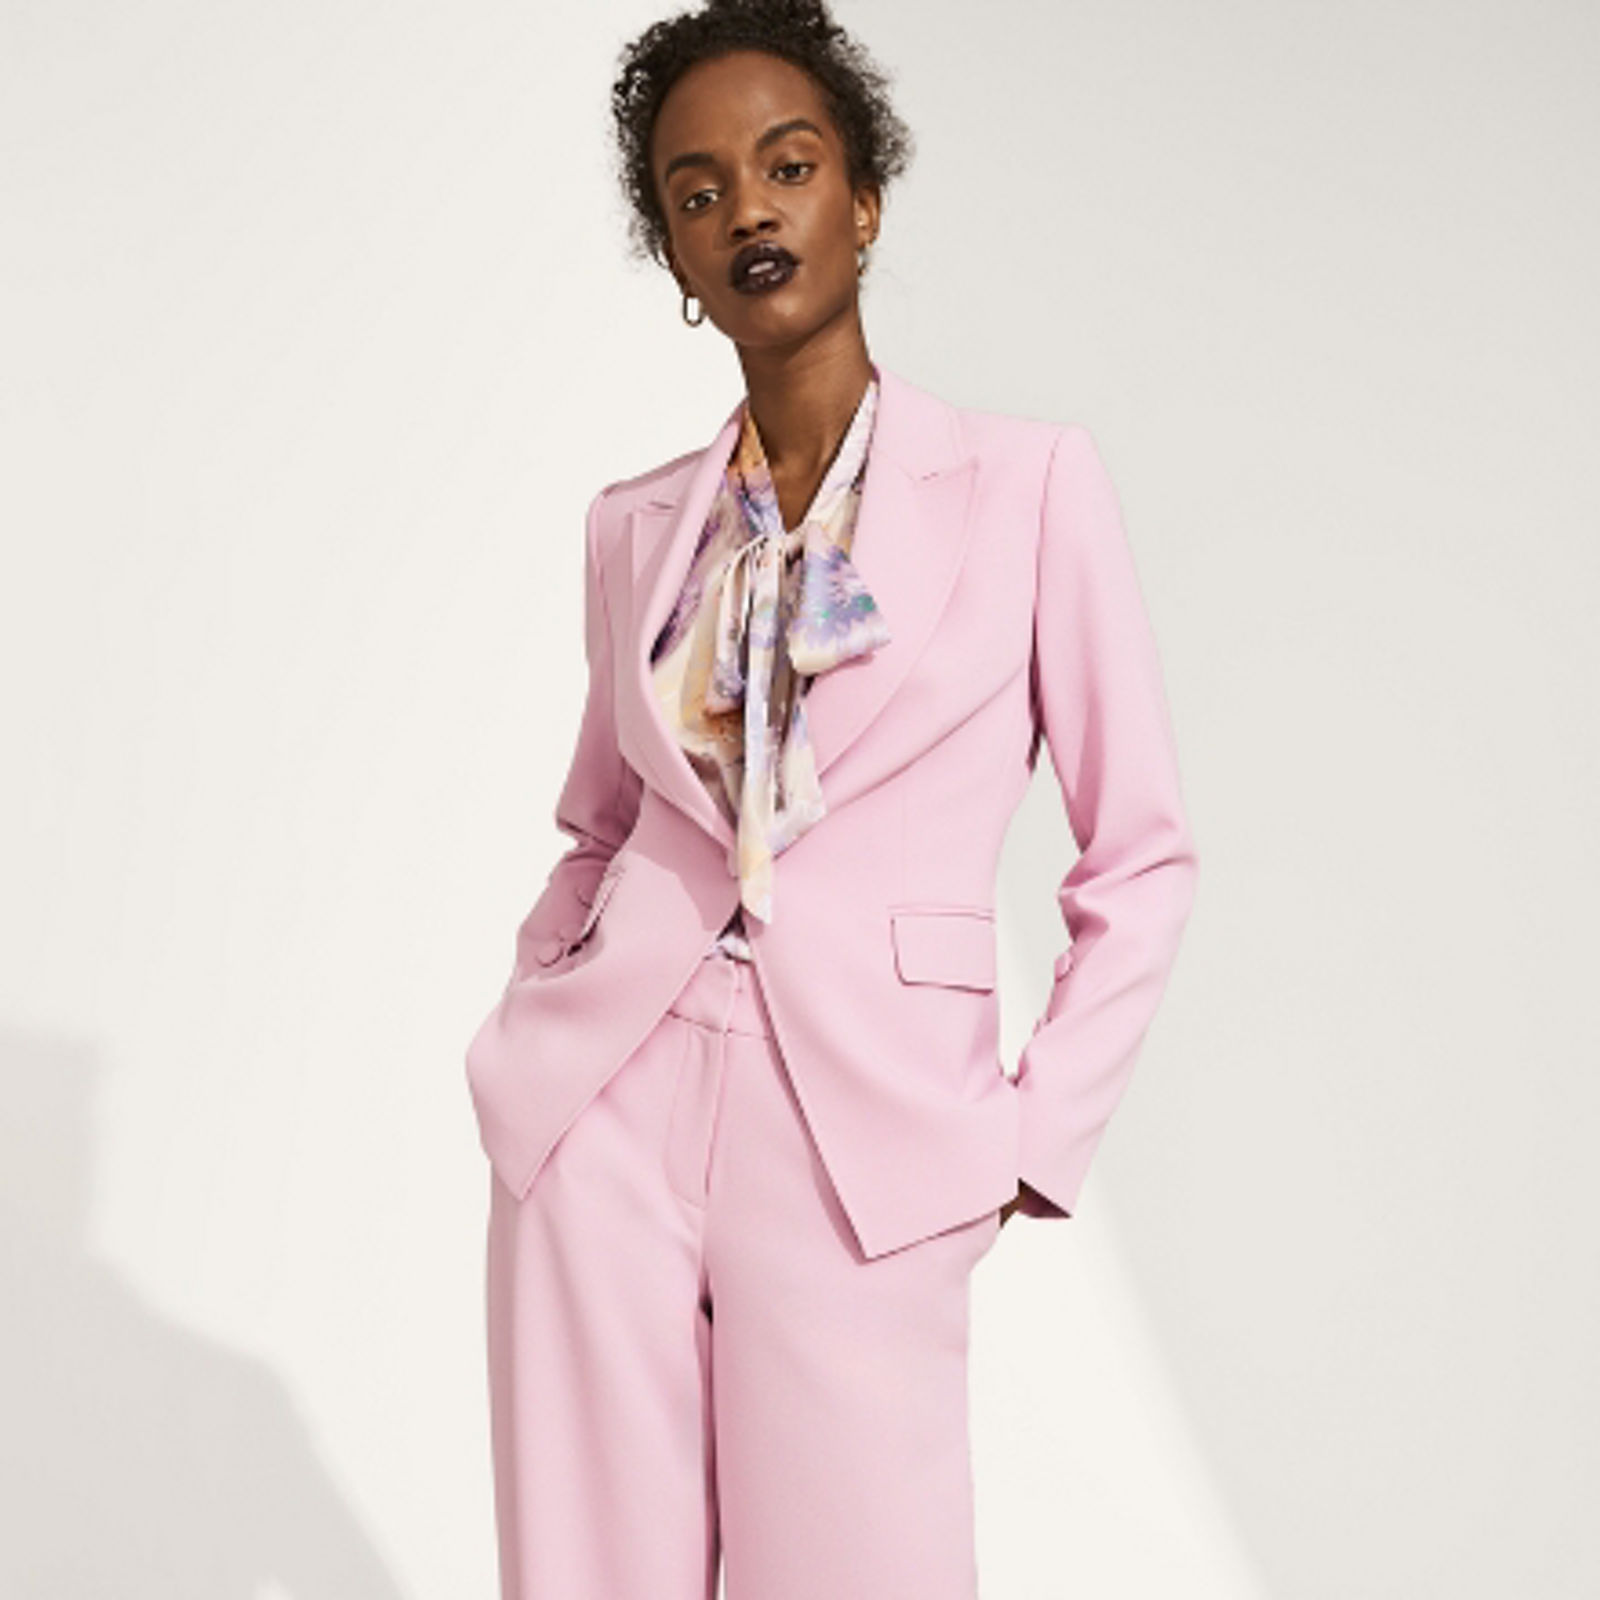 Women's Pantsuits And Suit Separates - Macy's